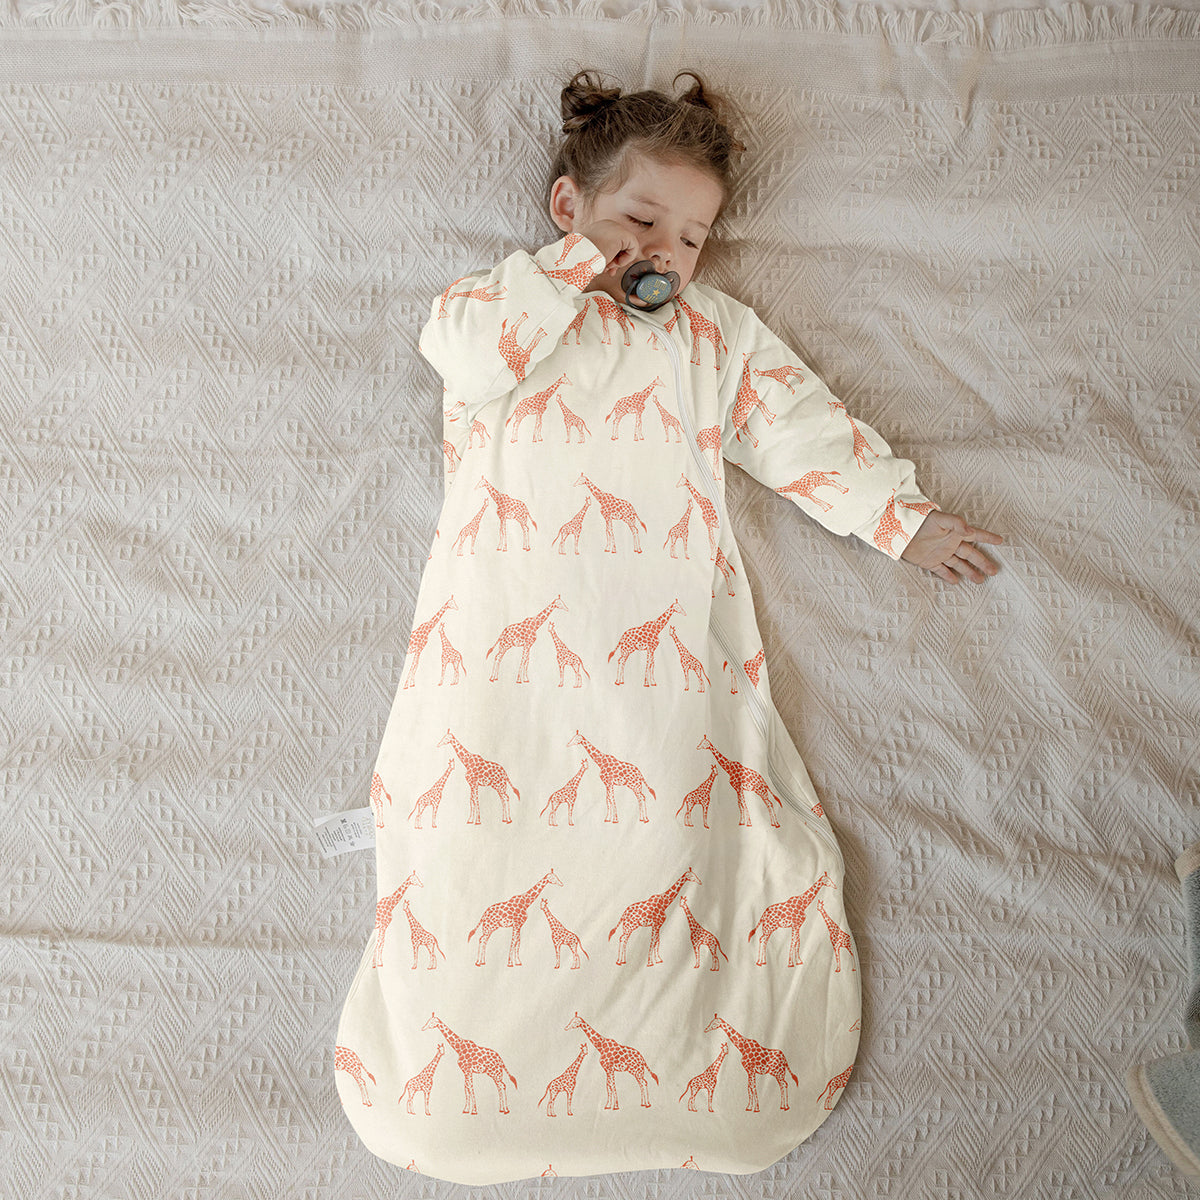 Zip Sleep Sack With Sleeves 2.5 TOG Girl - Giraffe | Kaiya Angel